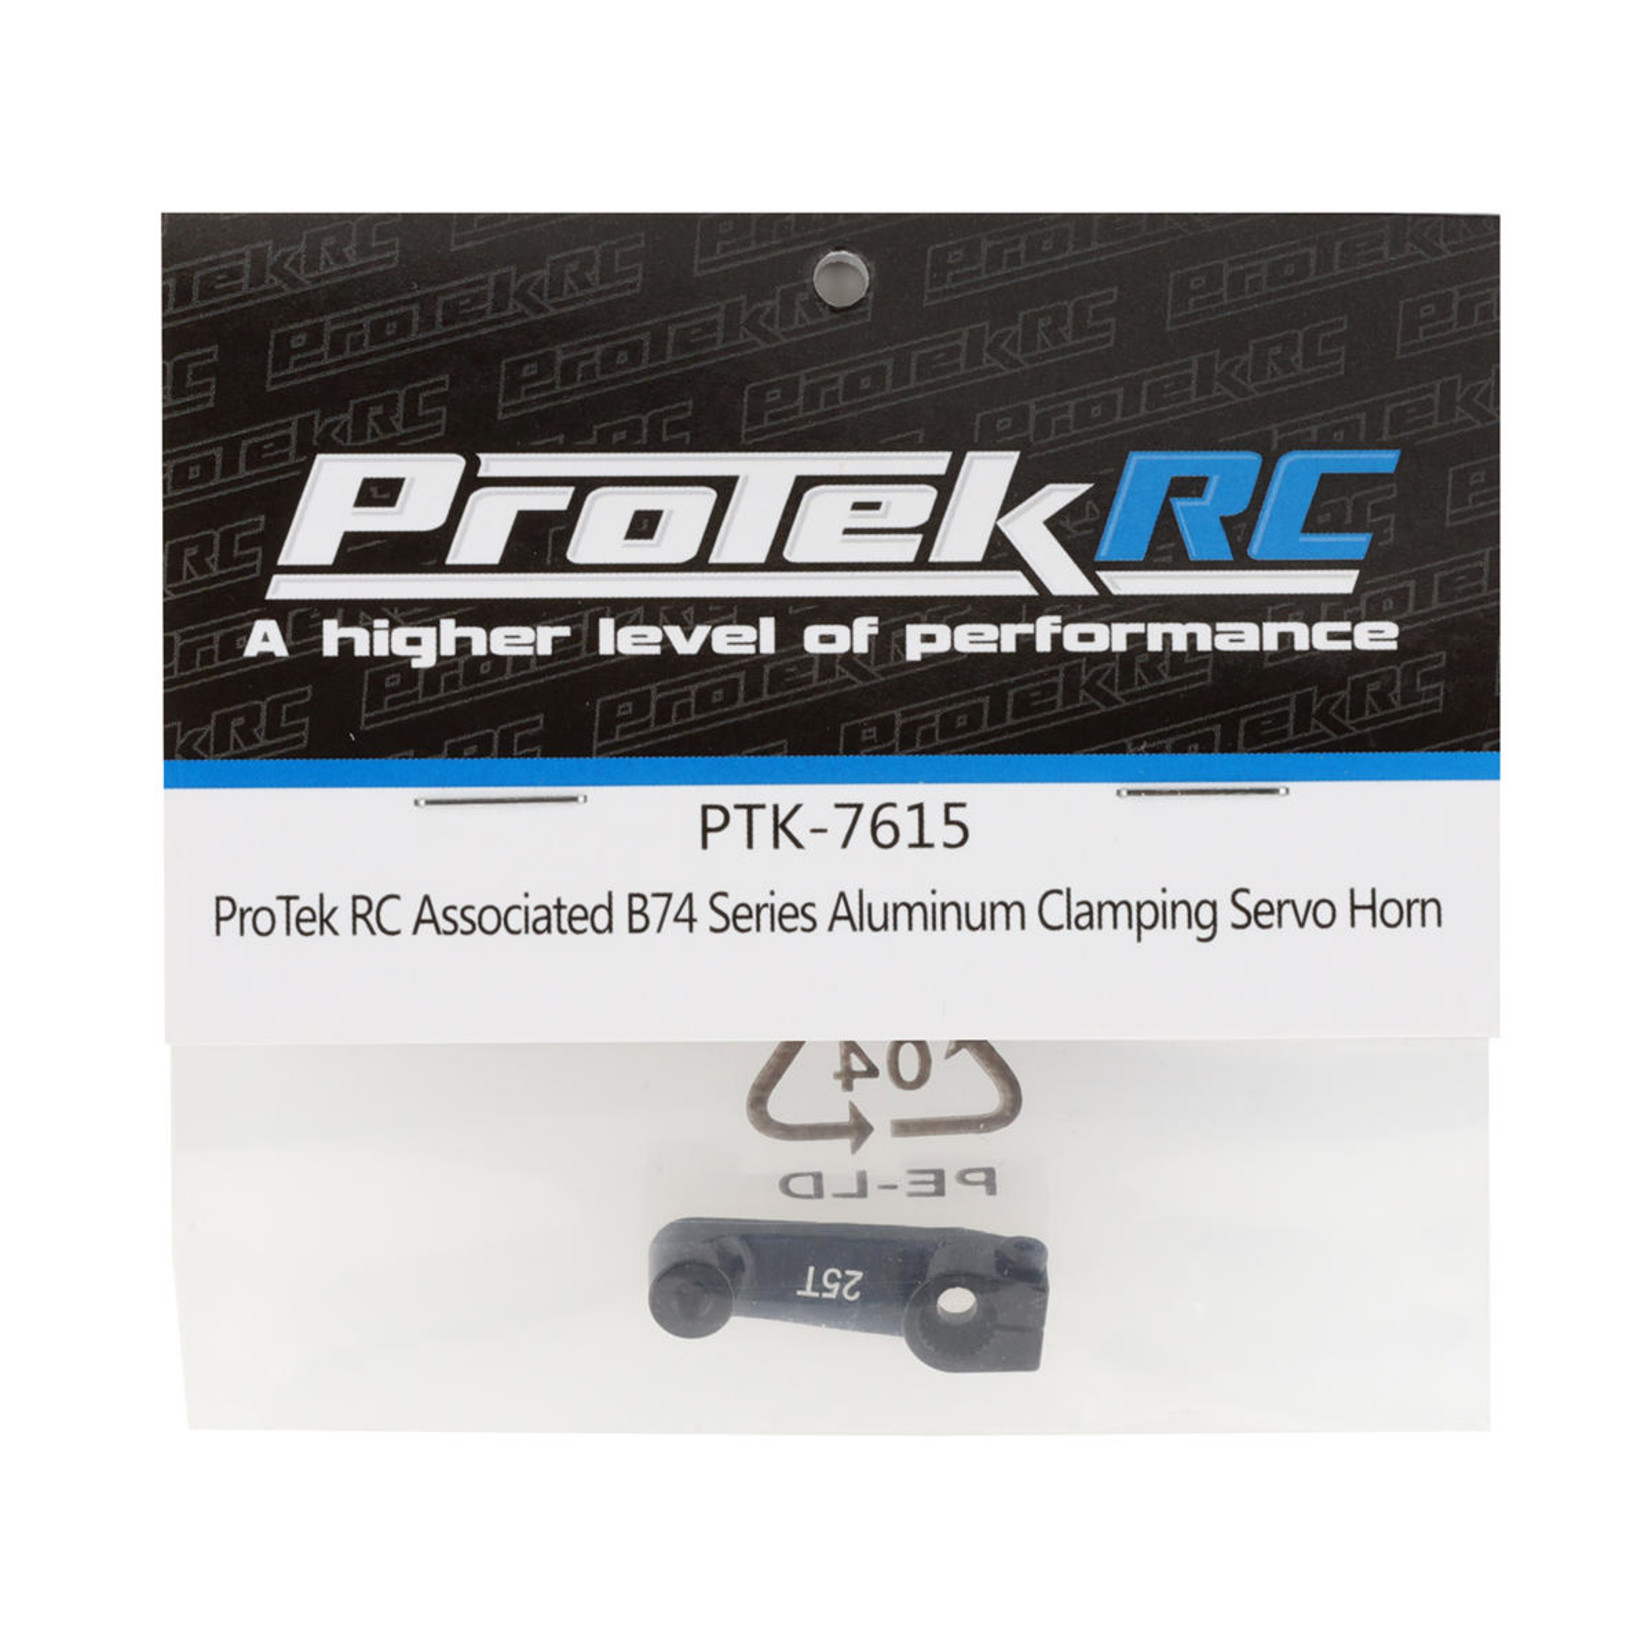 ProTek RC ProTek RC Associated B74 Series Aluminum Clamping Servo Horn (Black) (25T-Futaba/Savox/ProTek) #PTK-7615